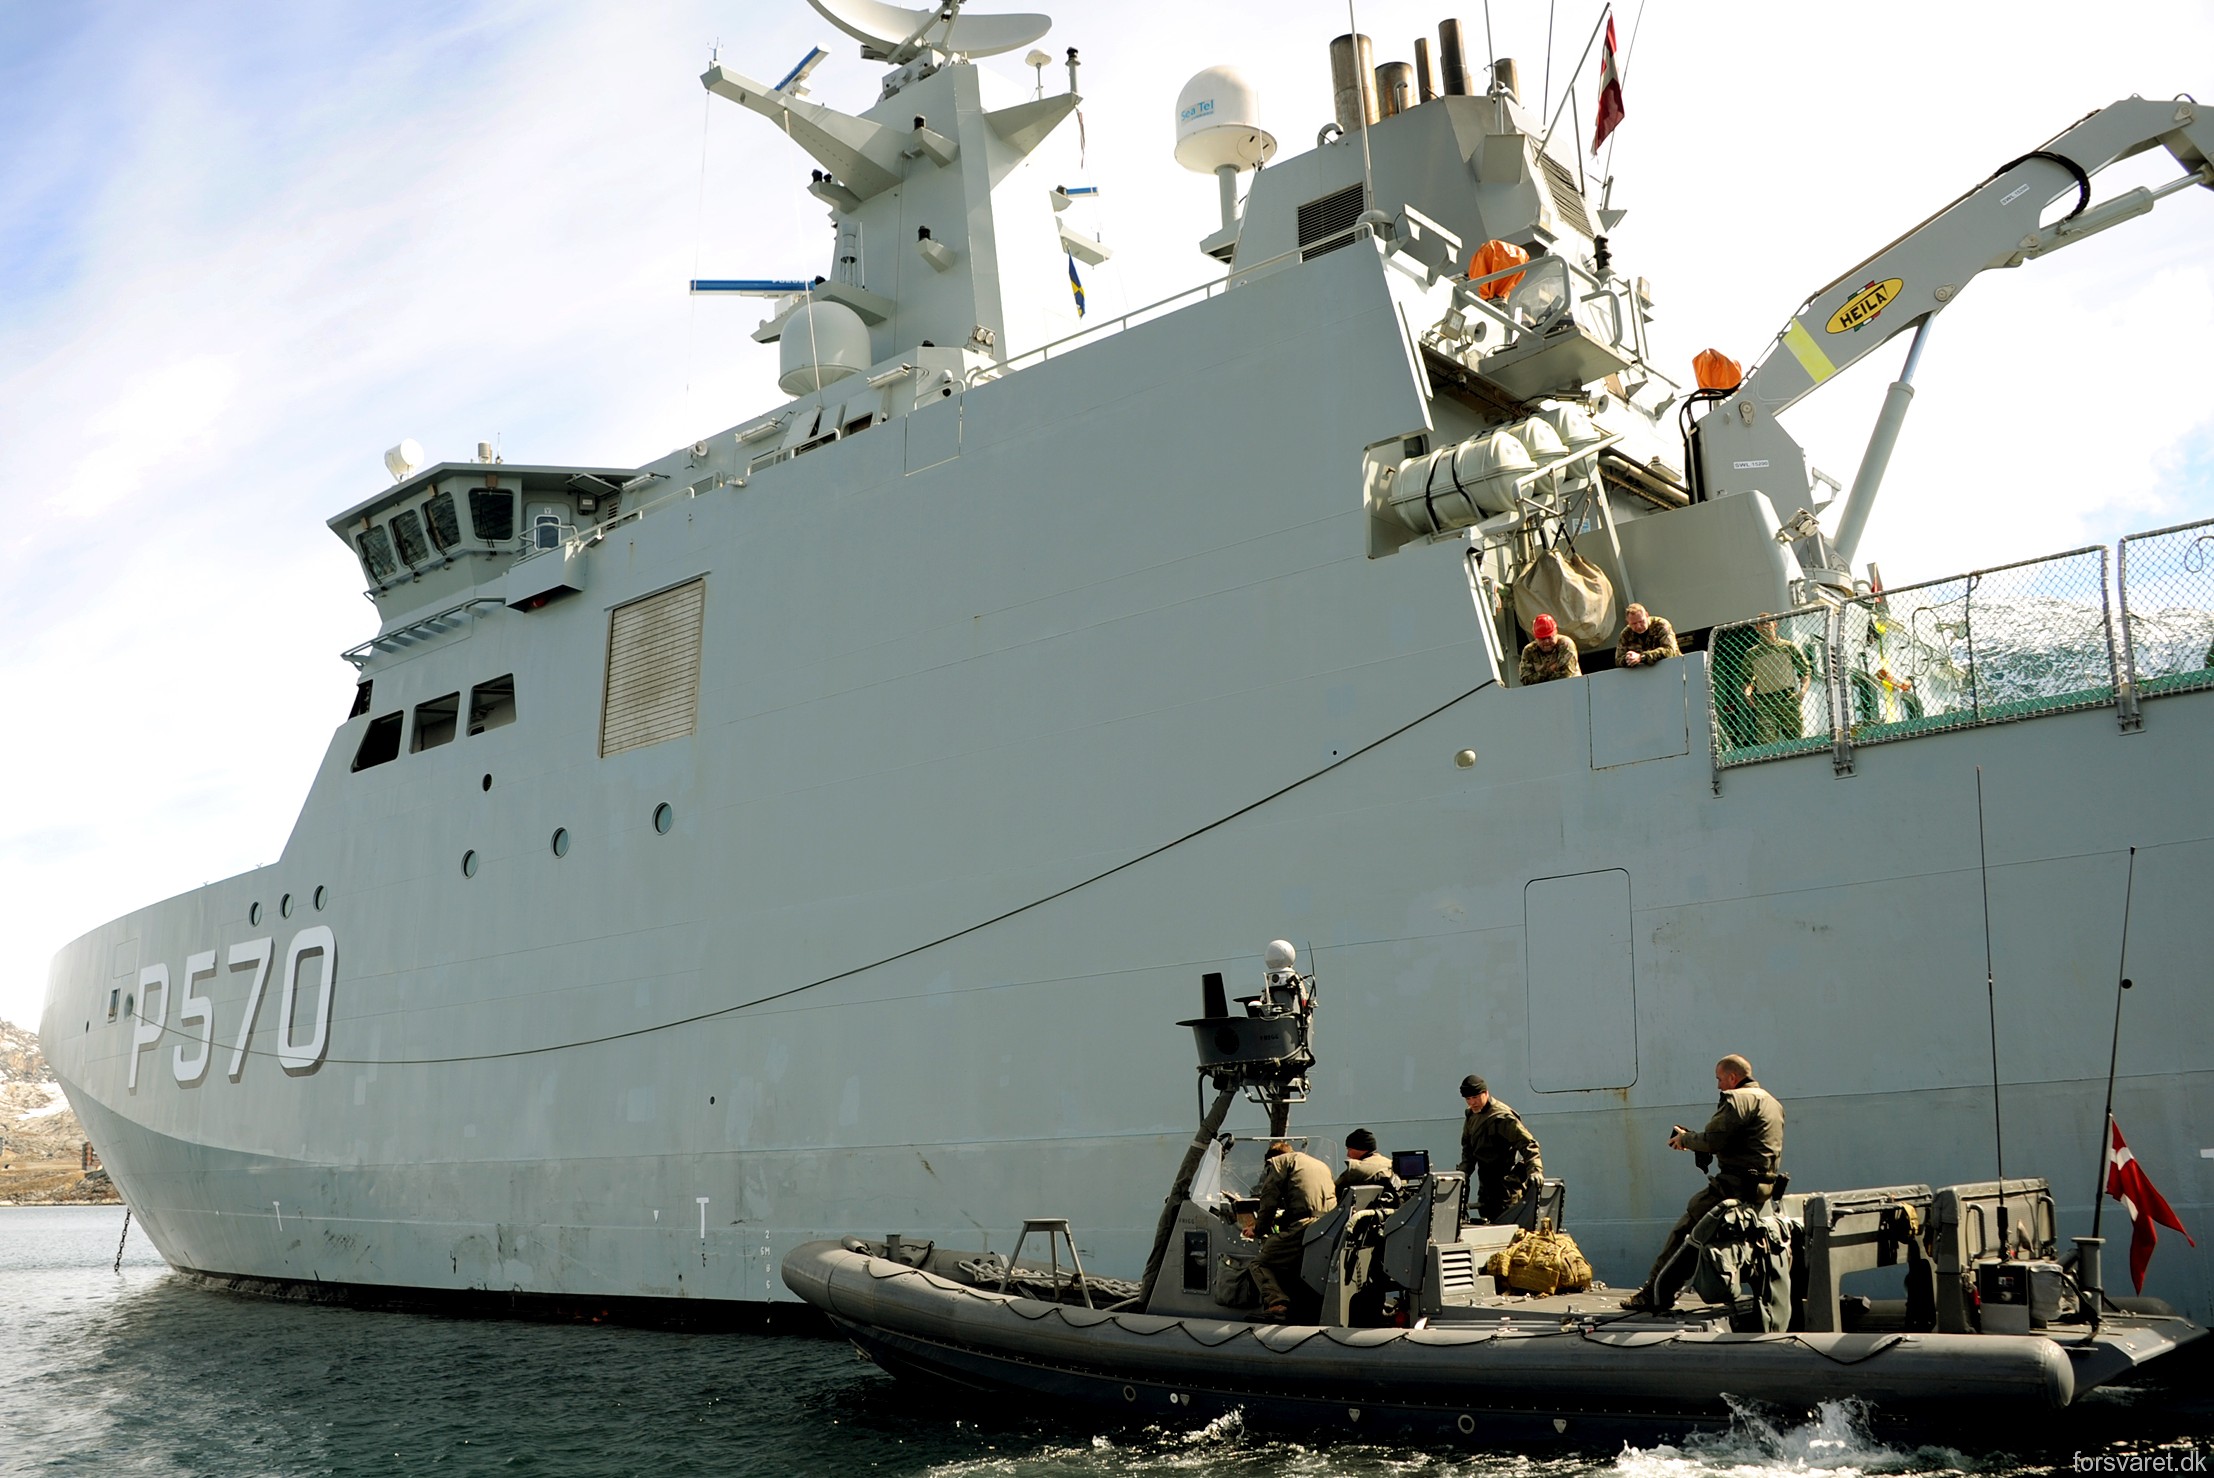 p-570 hdms knud rasmussen class offshore patrol vessel royal danish navy inspektionsfartøj 08